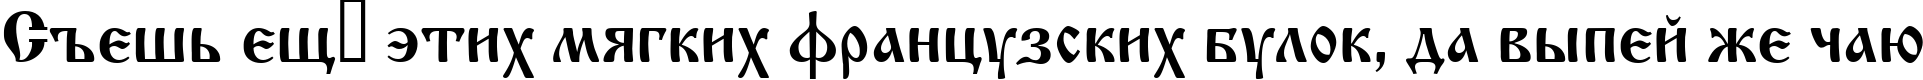 Пример написания шрифтом OldStyle текста на русском